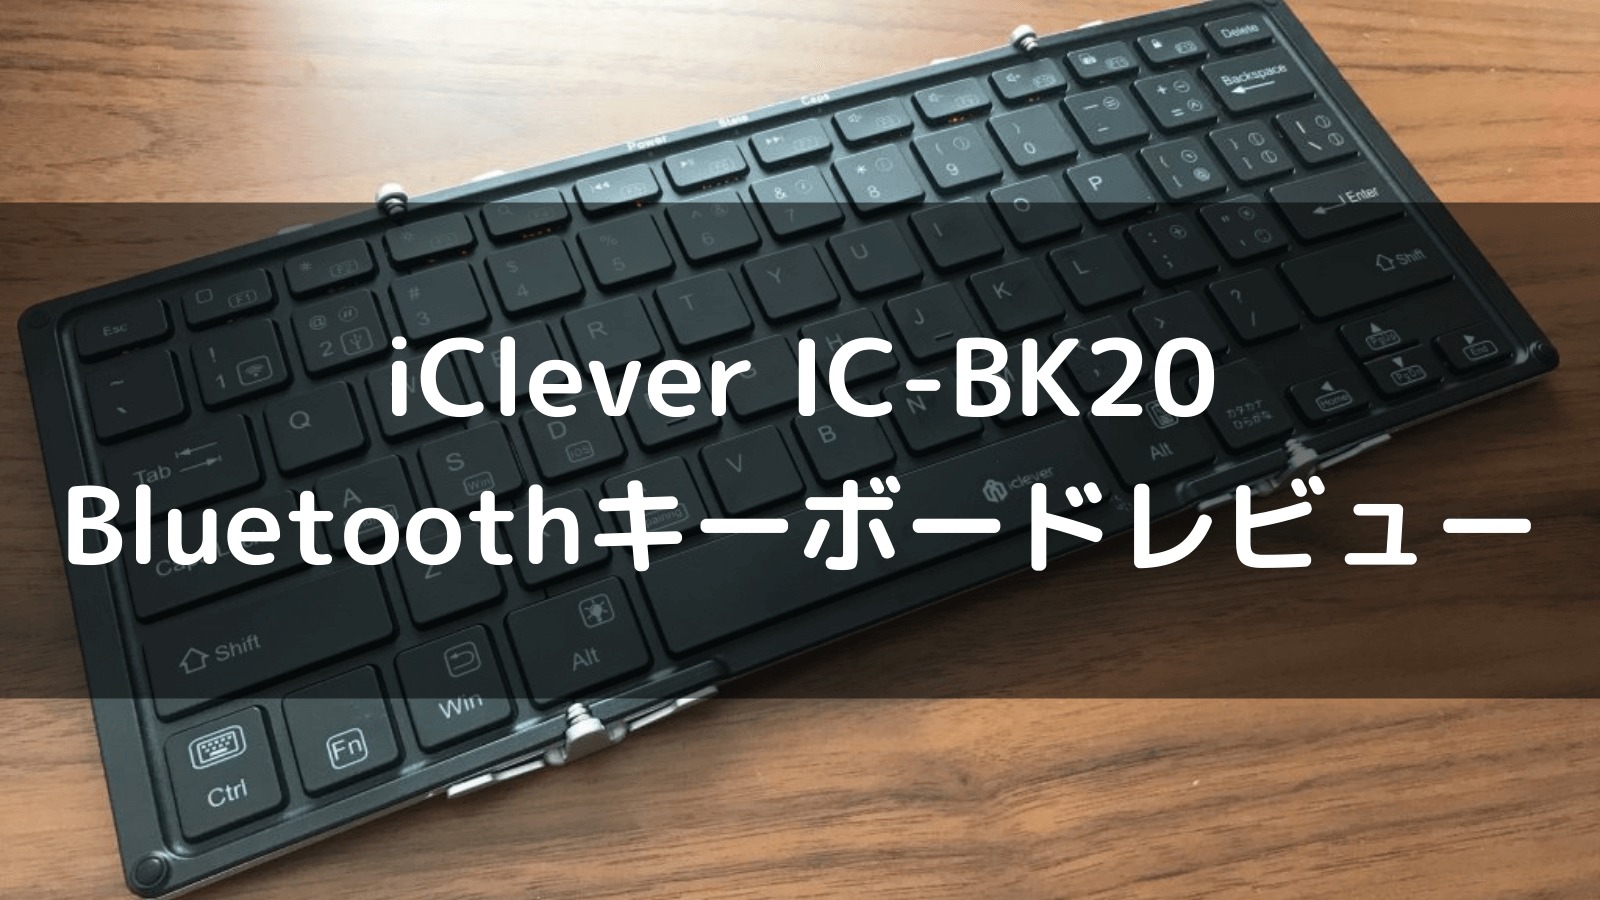 iPadに最適の折りたたみキーボード iClever IC-BK20 | DynaKnowledge